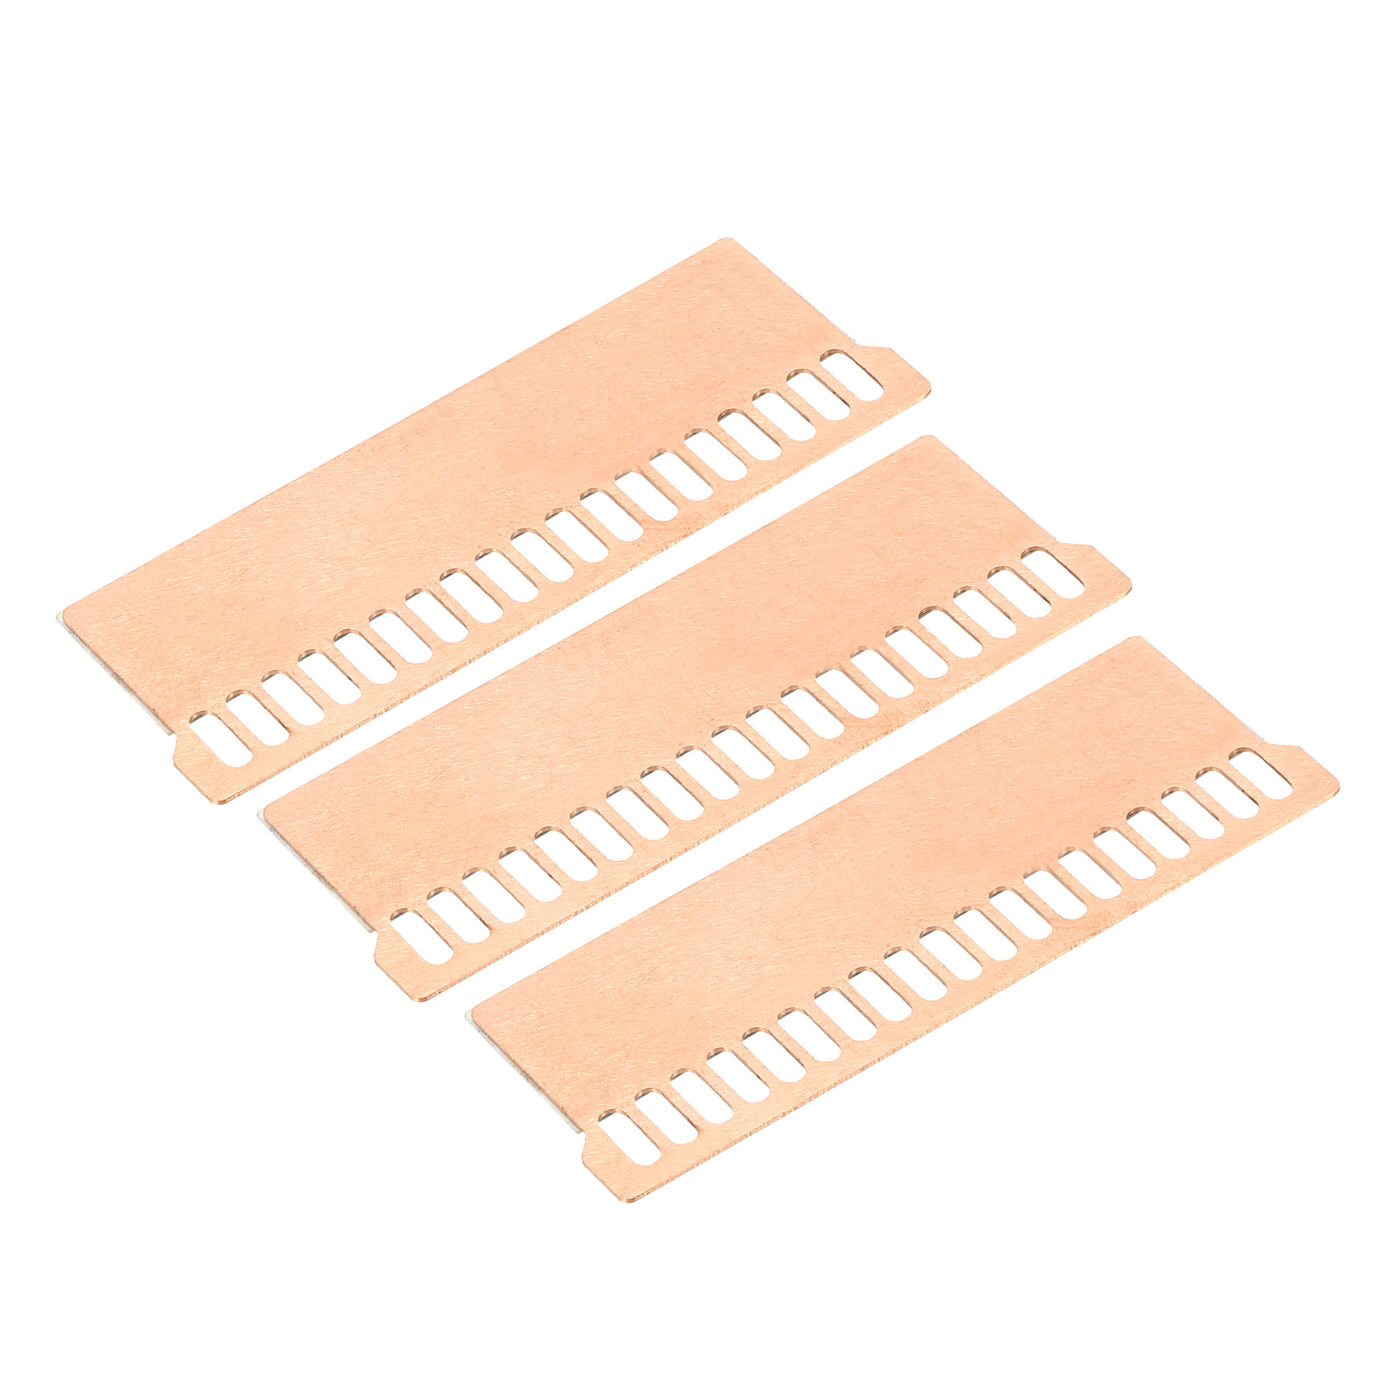 Harfington Copper Heatsink 63x23x0.5mm with Conductive Adhesive for RAM, Memory Cooler 3pcs